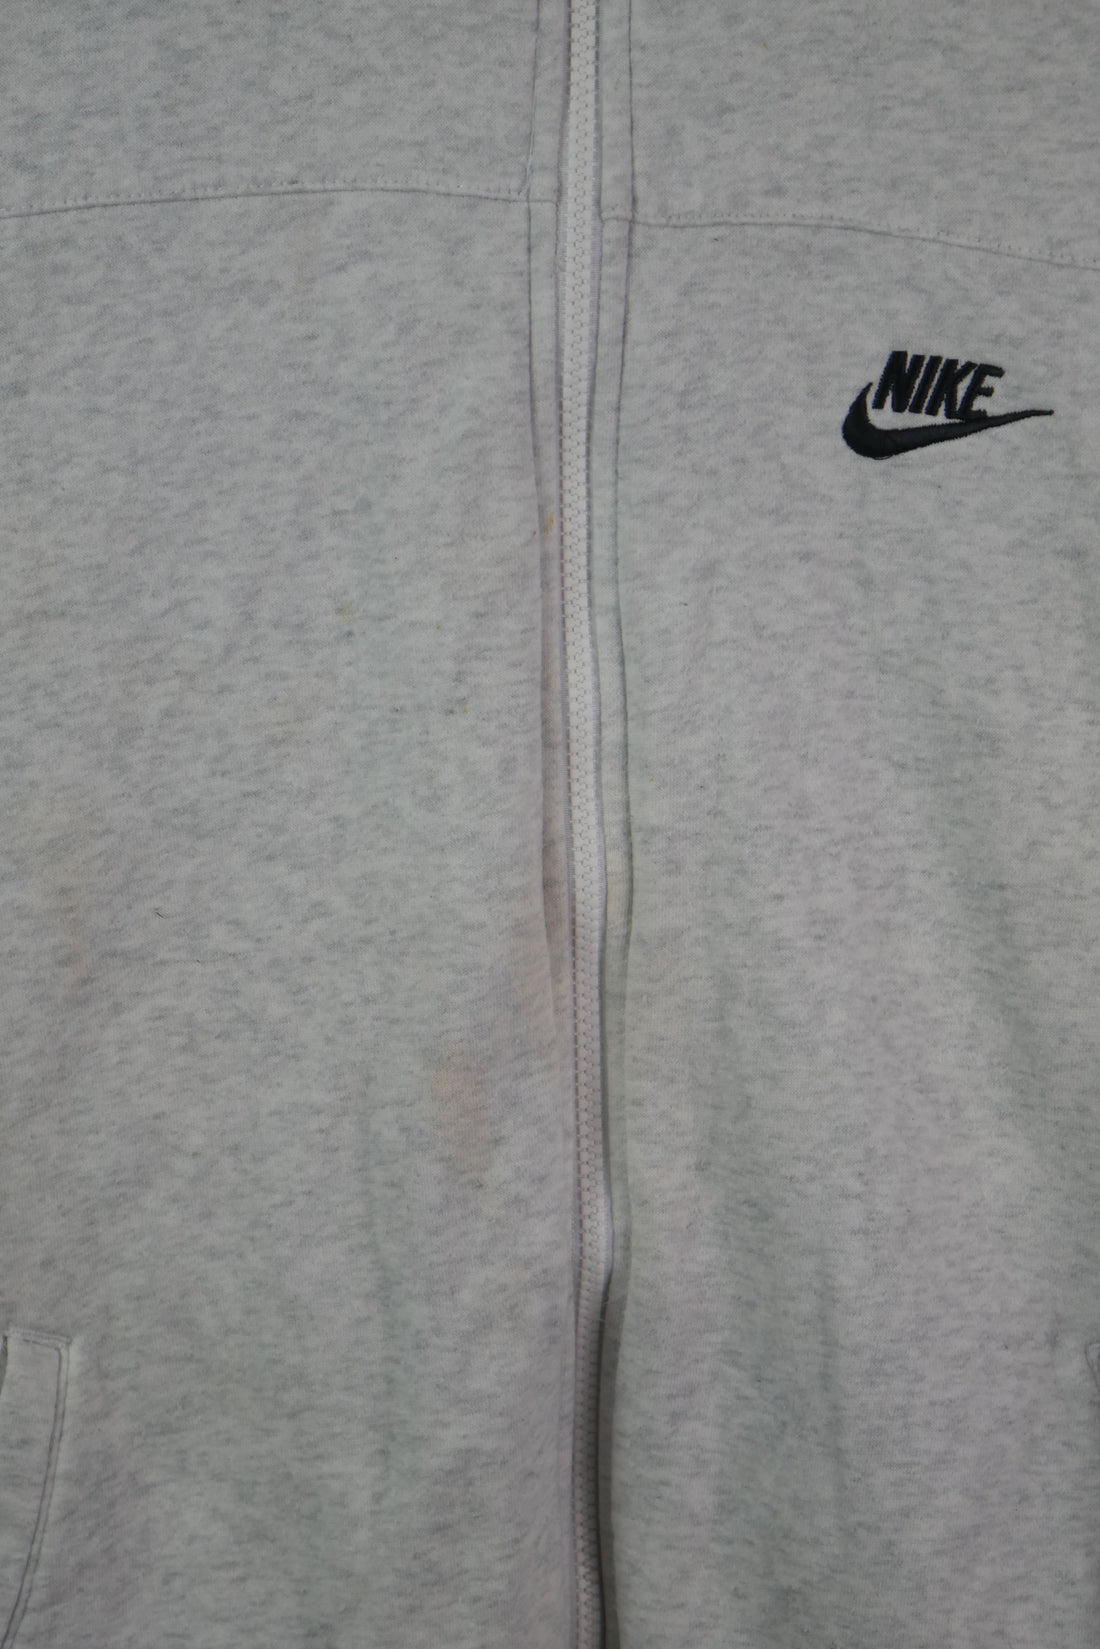 The Nike Zip Up Sweatshirt (M)